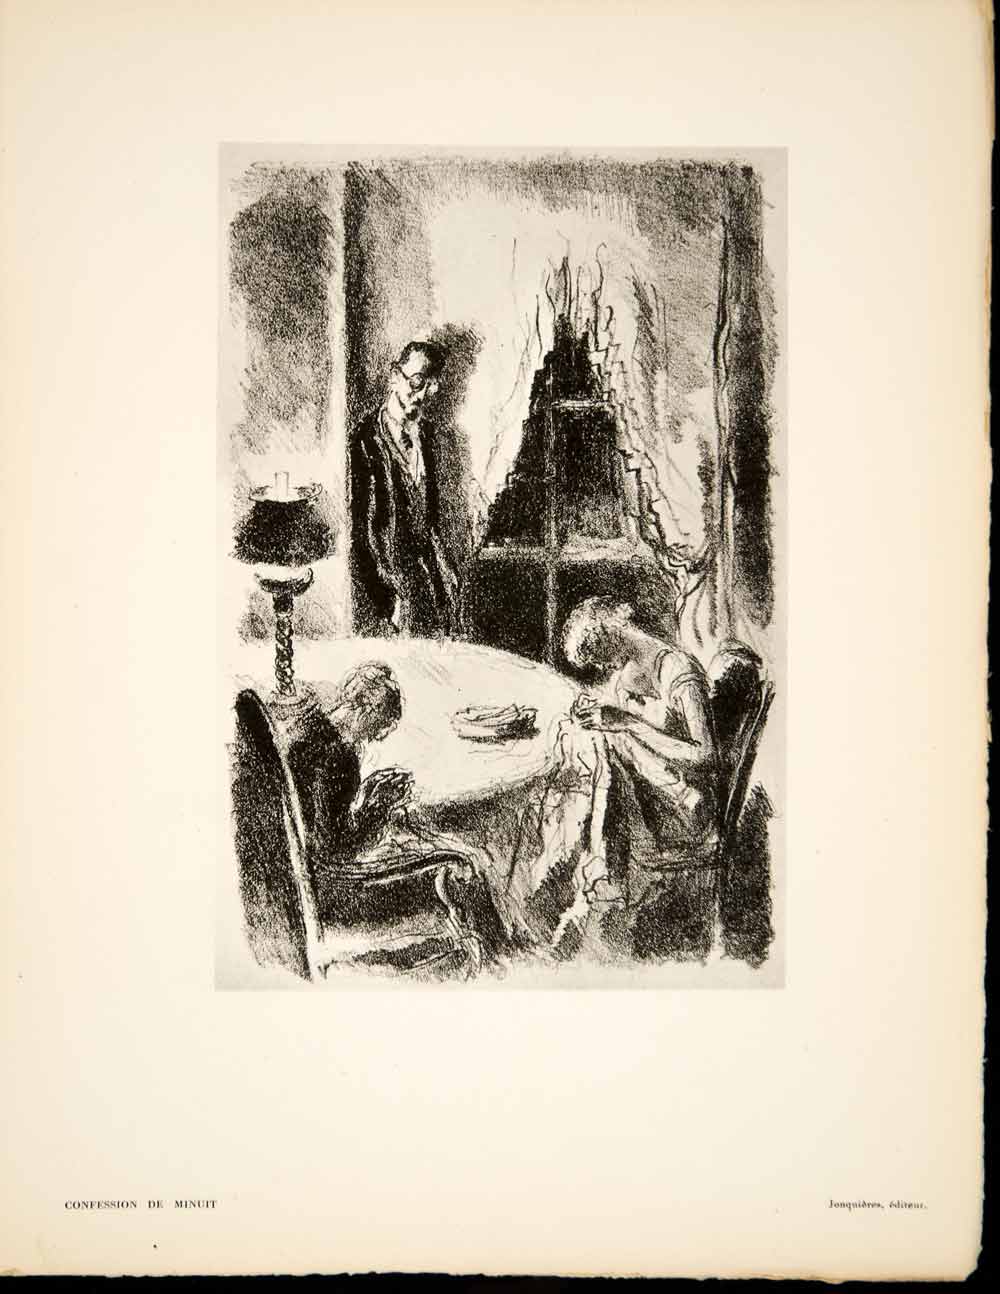 1930 Heliogravure Berthold Mahn Confession de Minuit Duhamel Women Sewing ADLB4